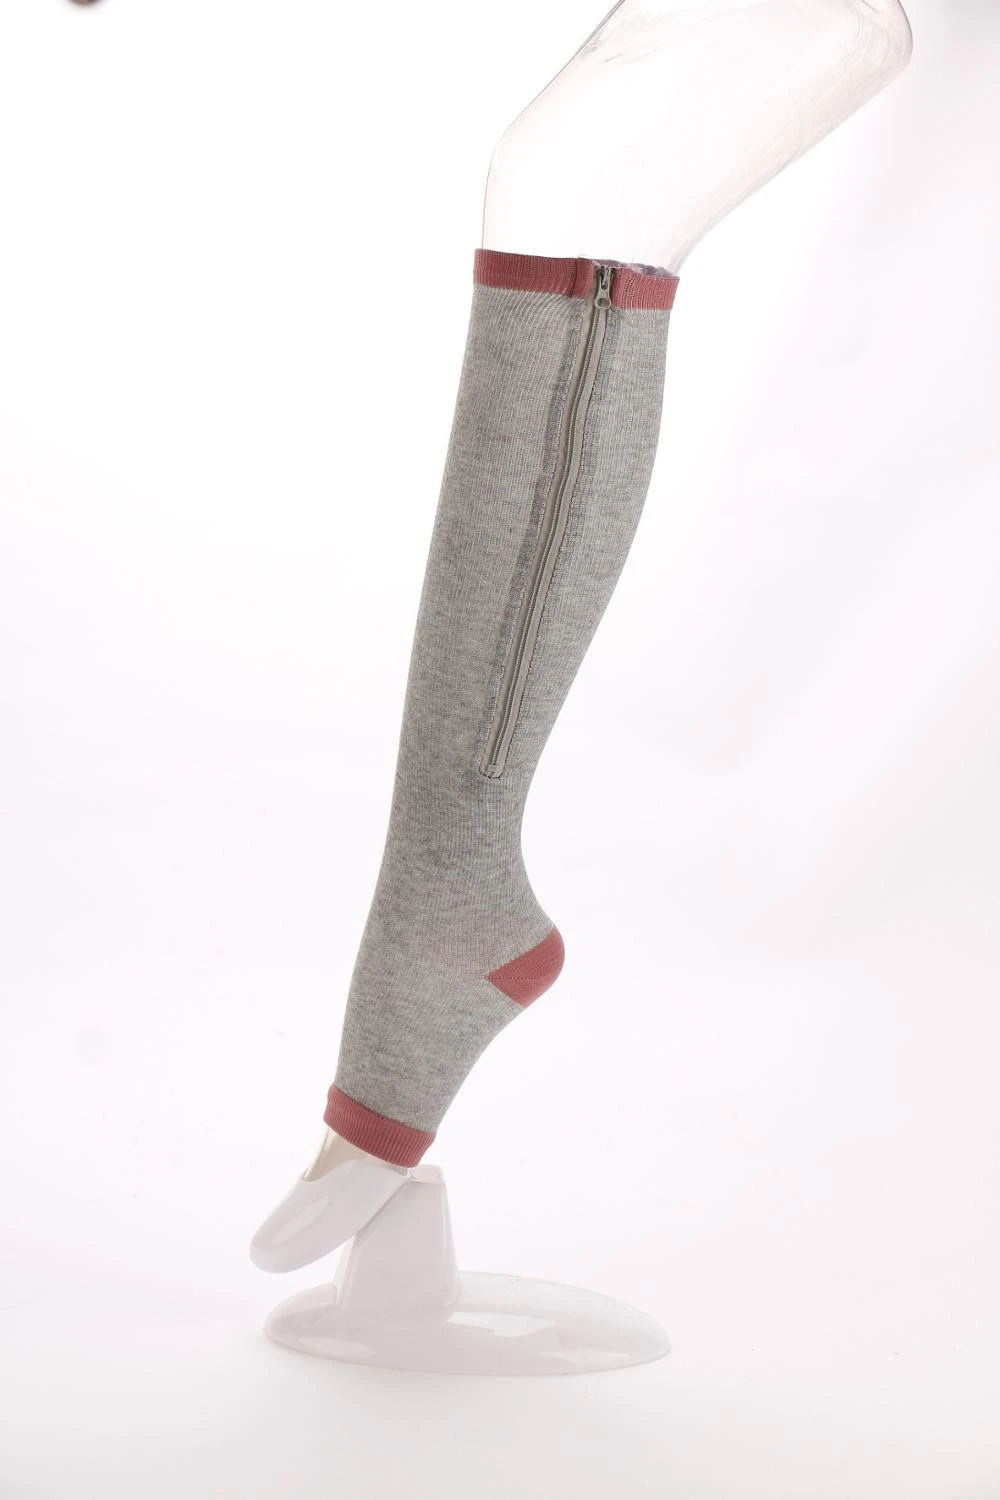 Zip Copper Sock Compression Socks Zipper Leg Support Knee Stockings Open Toe Sports Socks